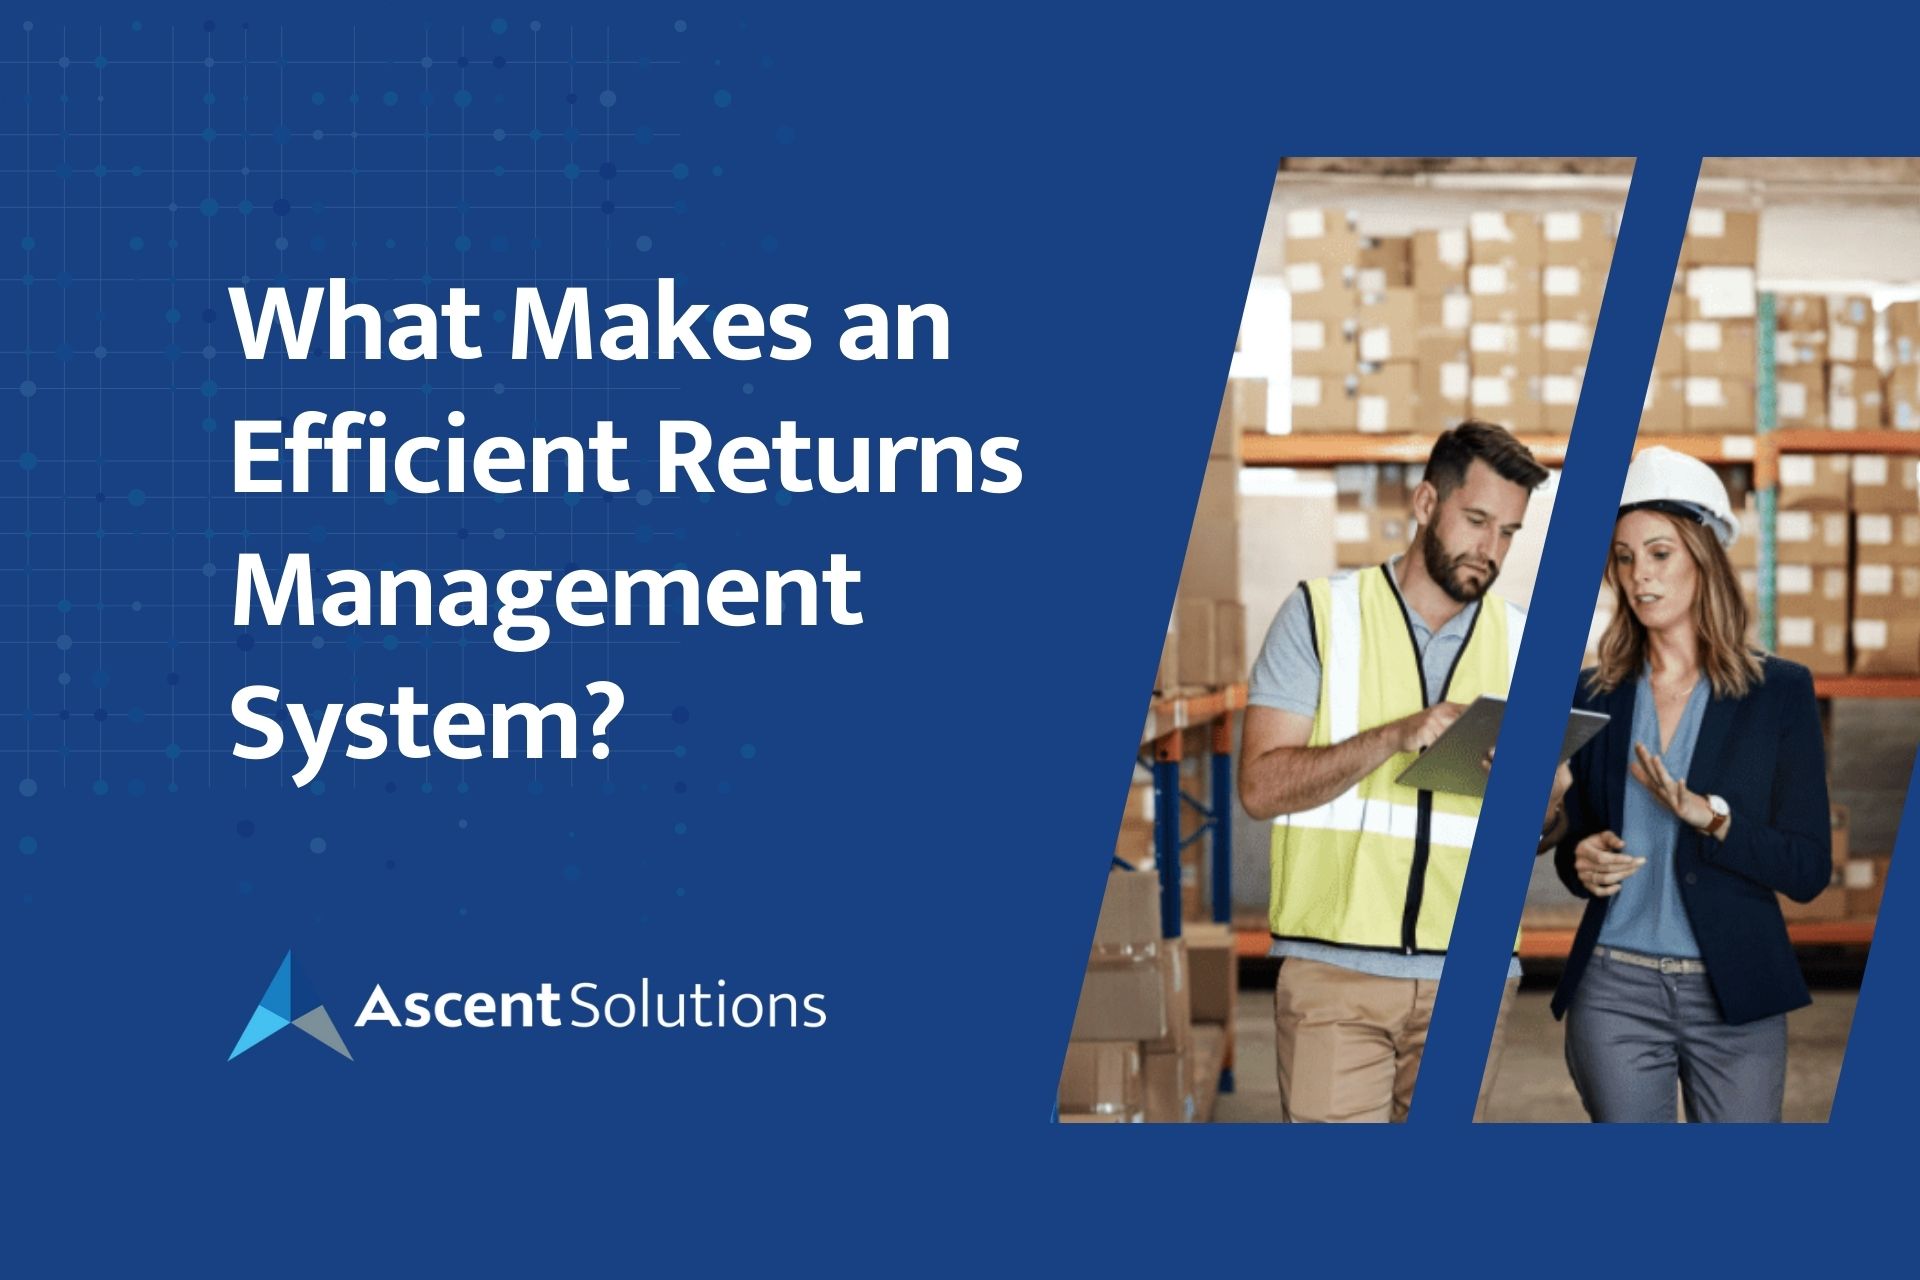 Ascent Solutions Makes an Efficient Returns Management System